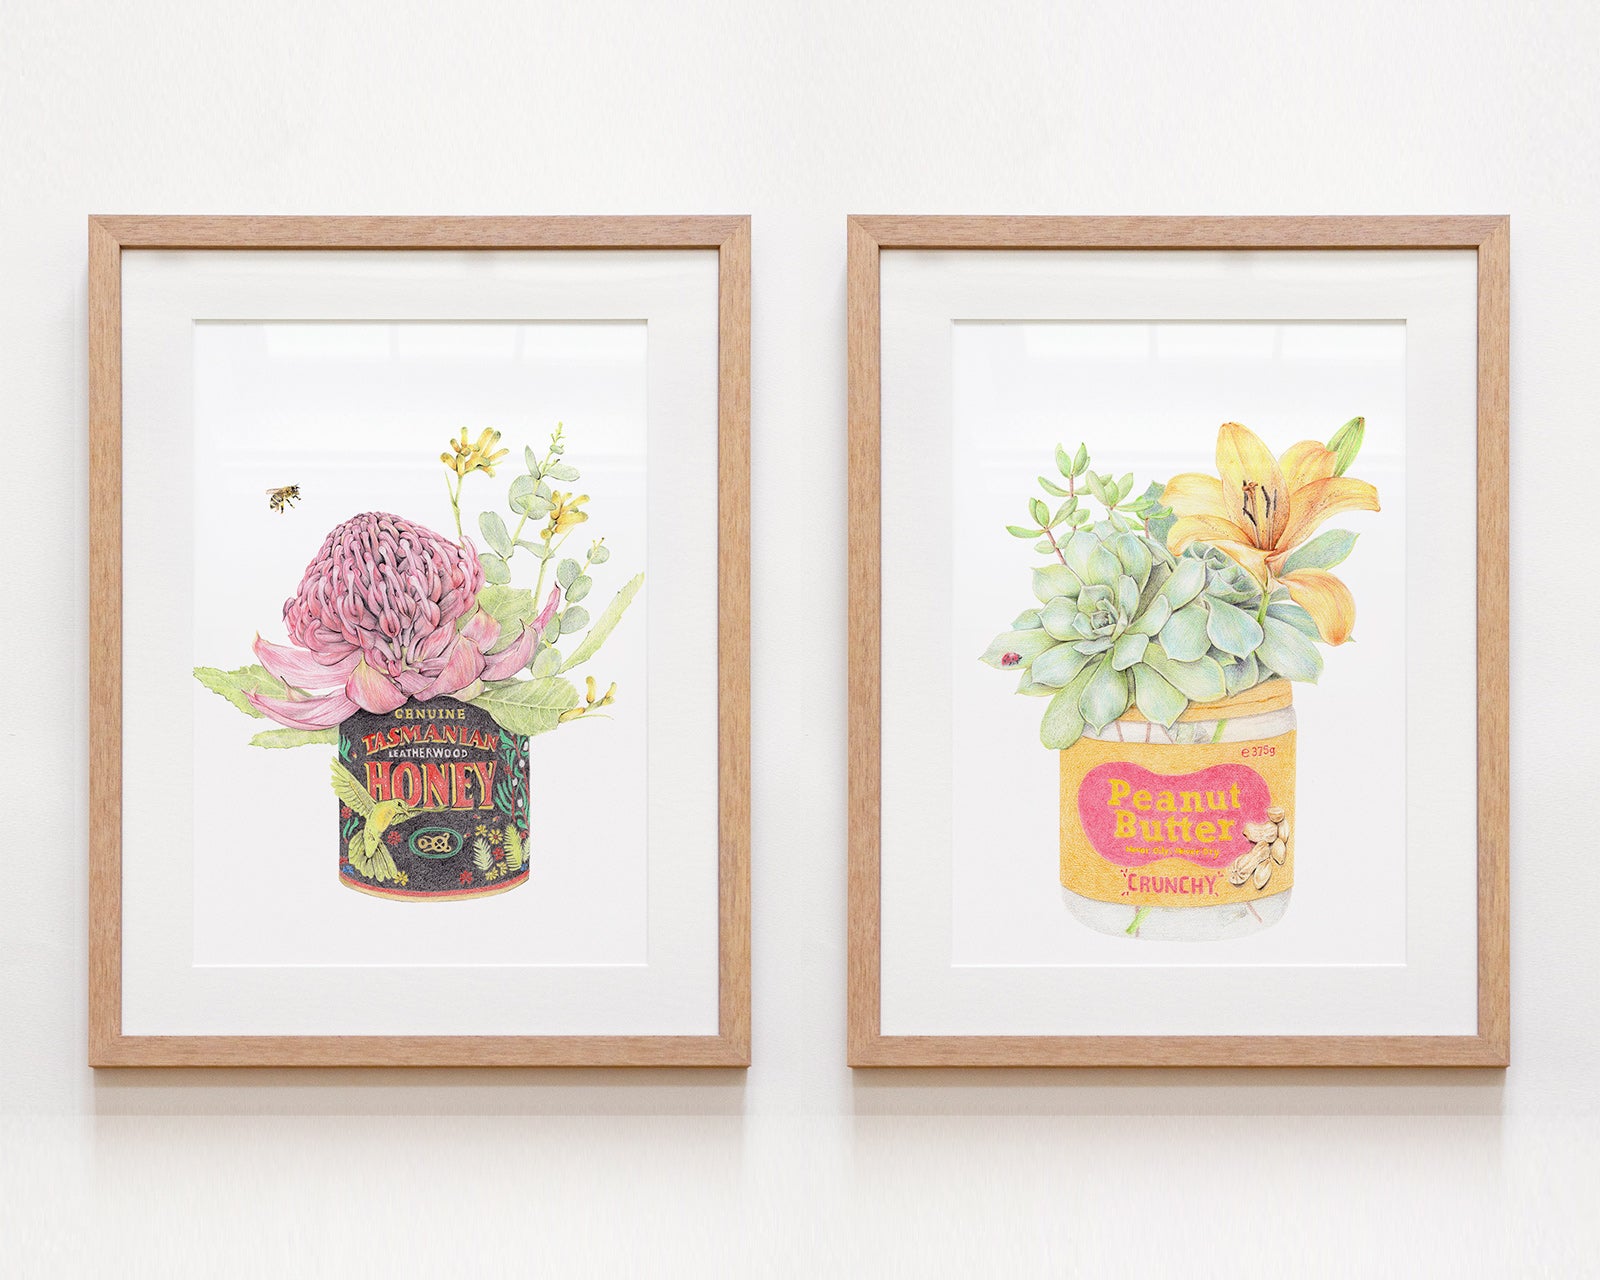 Set of 2 kitchen framed art with Australian themed designs